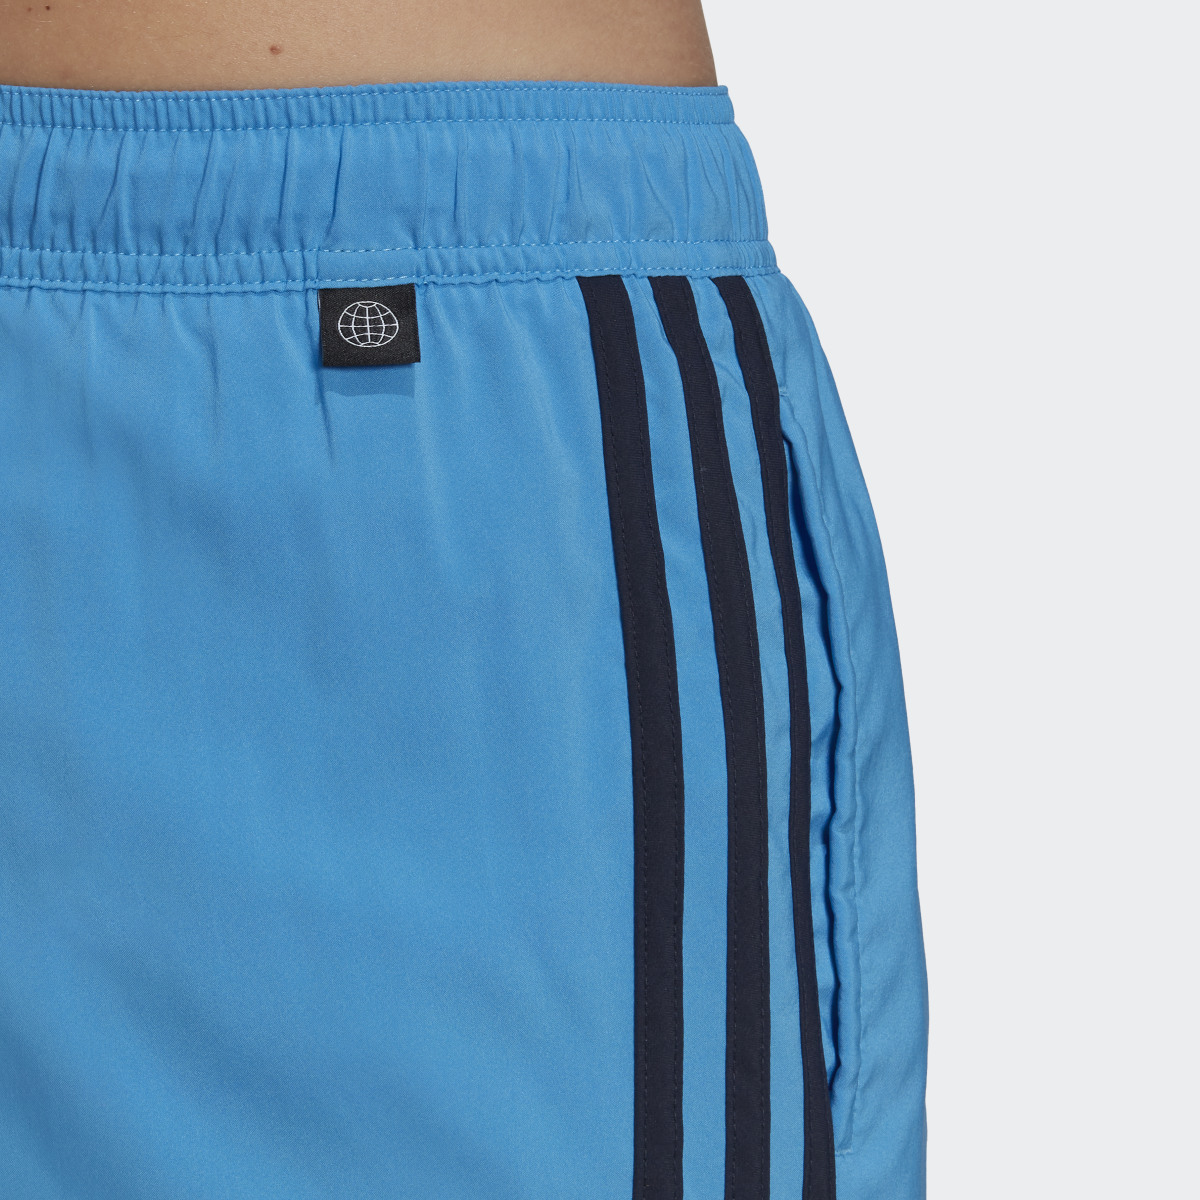 Adidas Classic-Length 3-Stripes Swim Shorts. 6